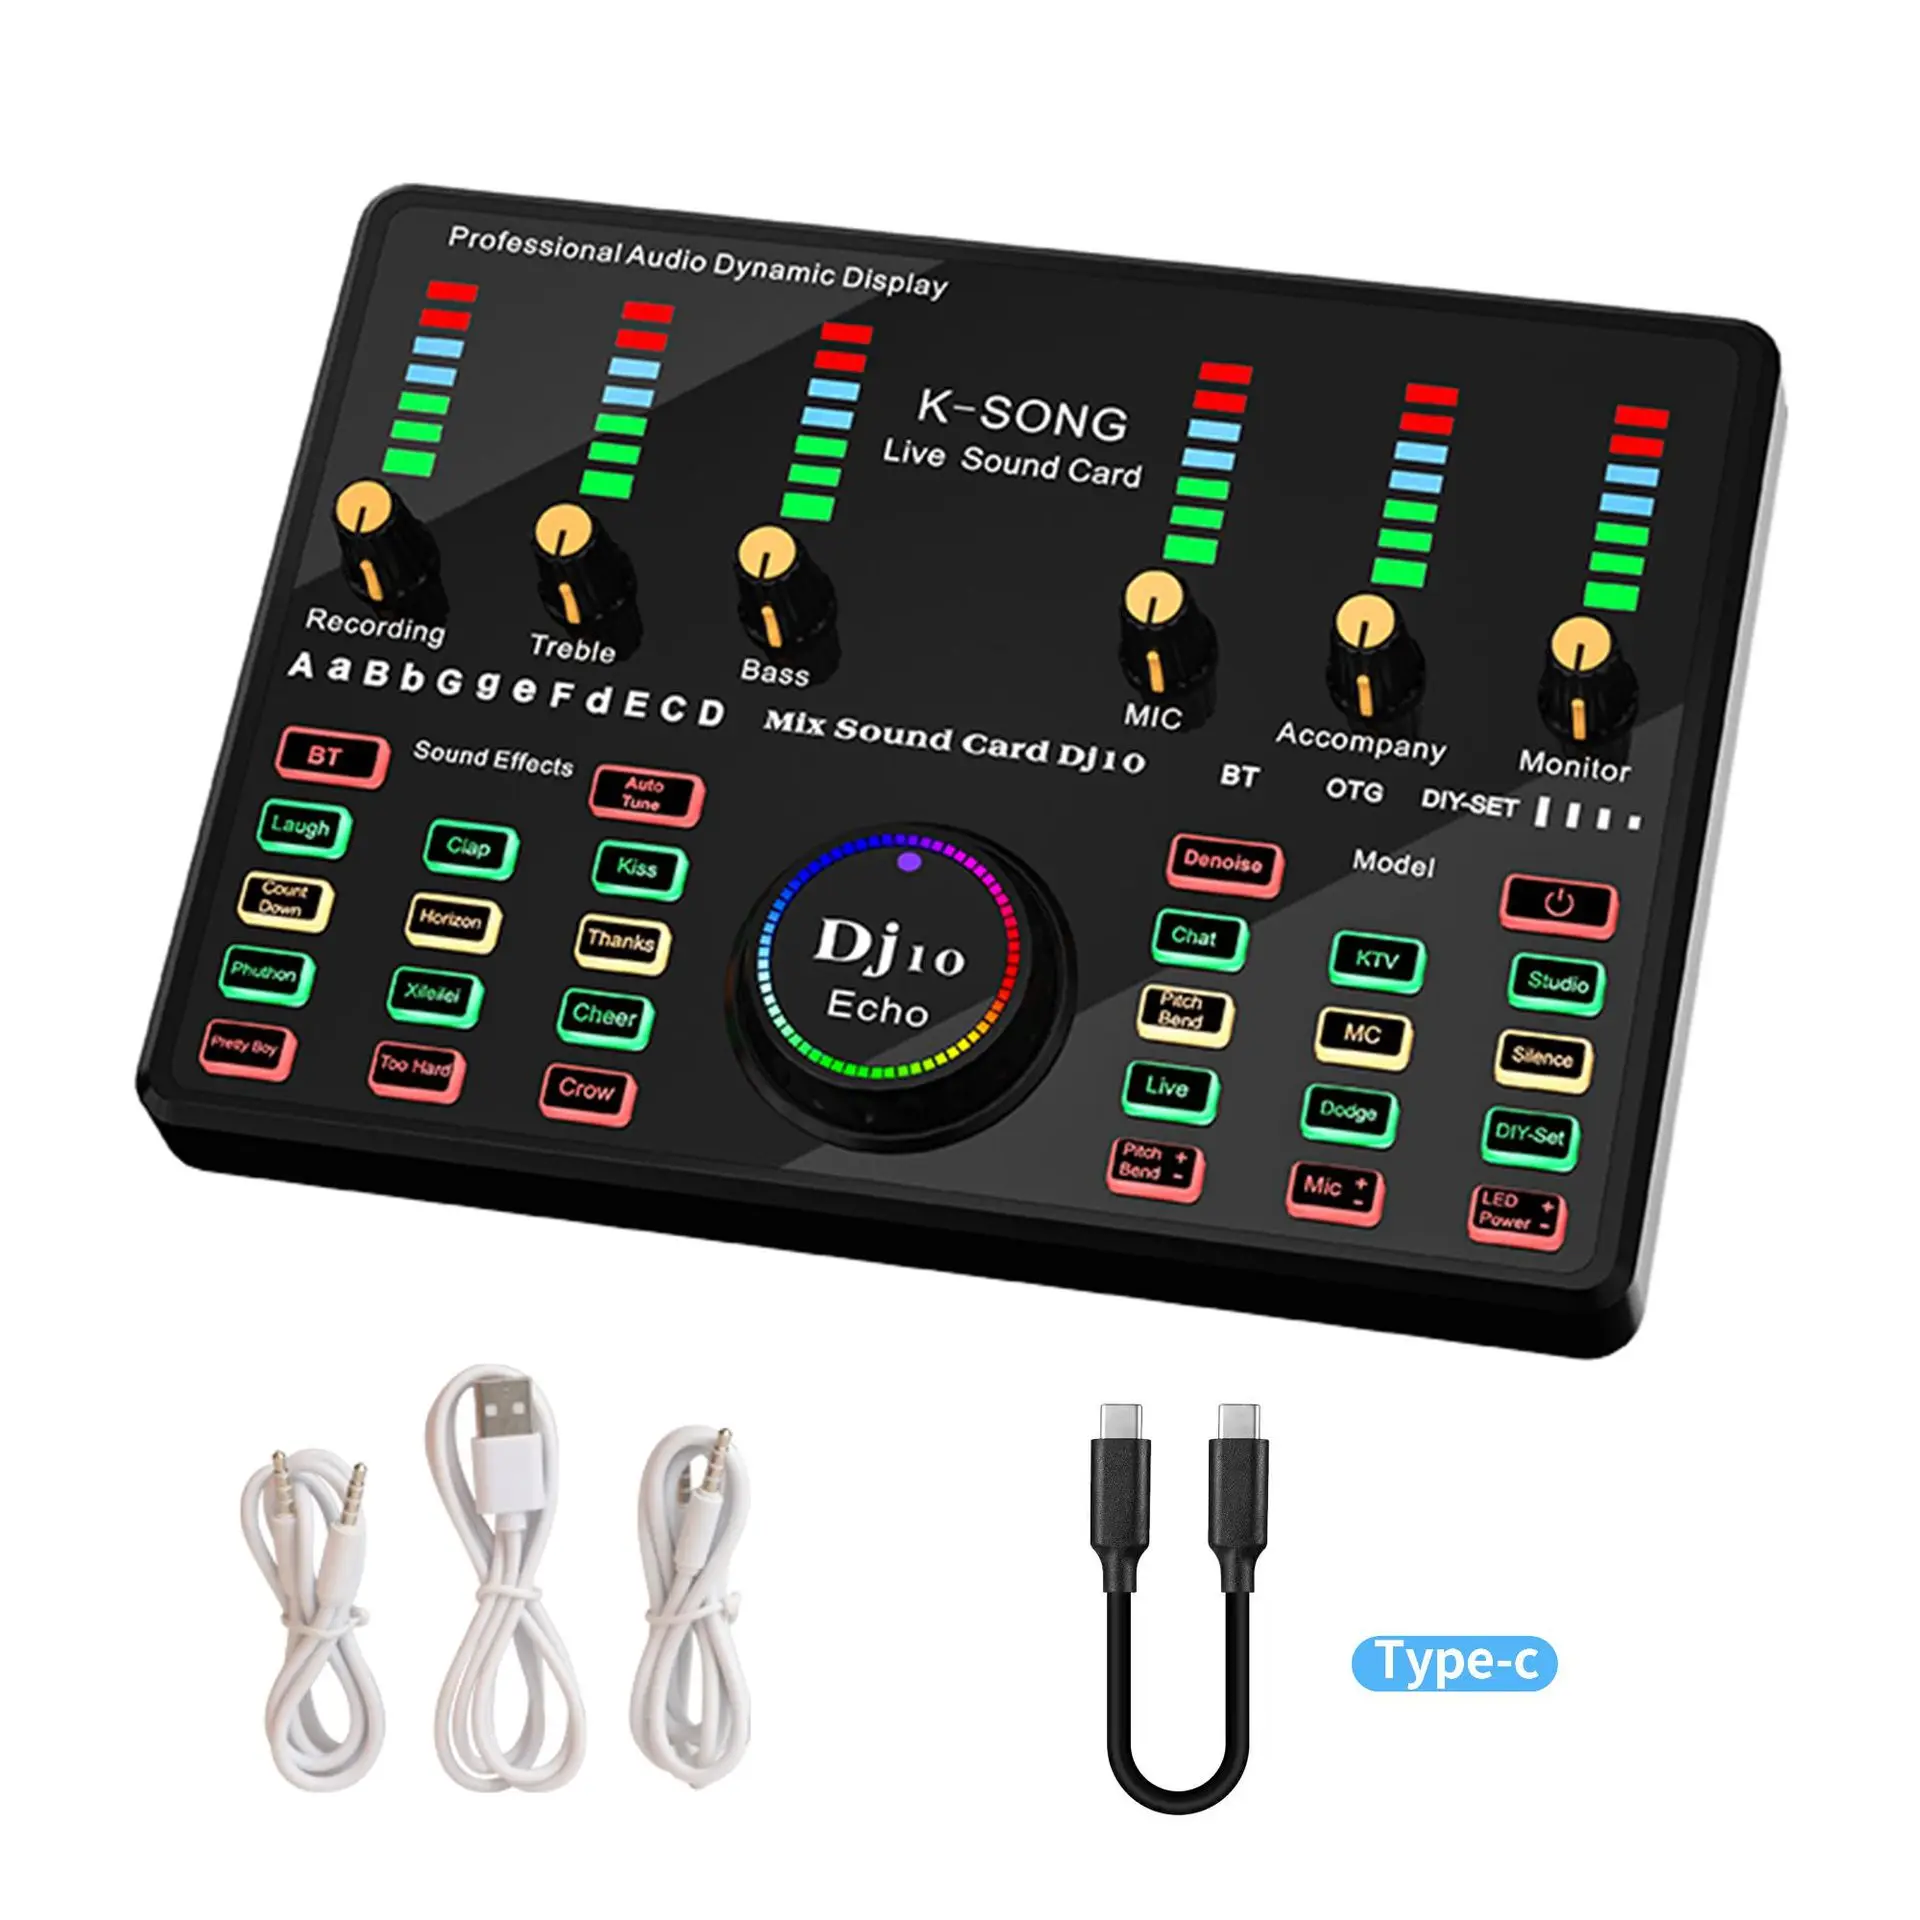 BM 800 Microphone BT Wireless Karaoke with Live Streaming DJ10 Sound Card for PC Phone Singing Gaming Youtube Tik Tok MIC